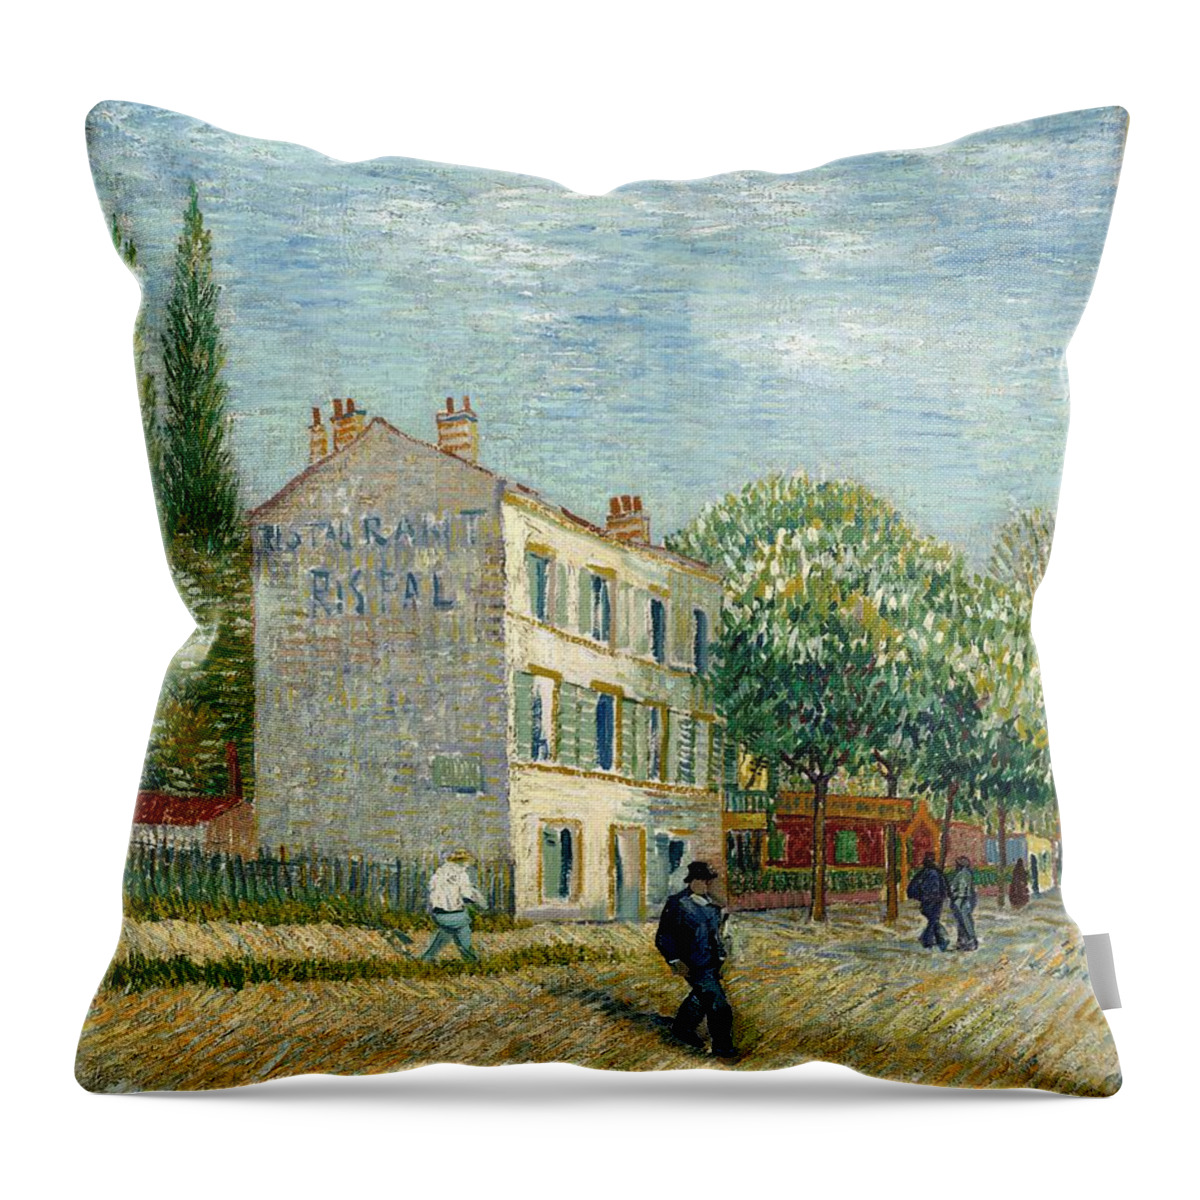 The Restaurant Rispal In Asnières Throw Pillow featuring the painting The Restaurant Rispal in Asnieres by Vincent van Gogh